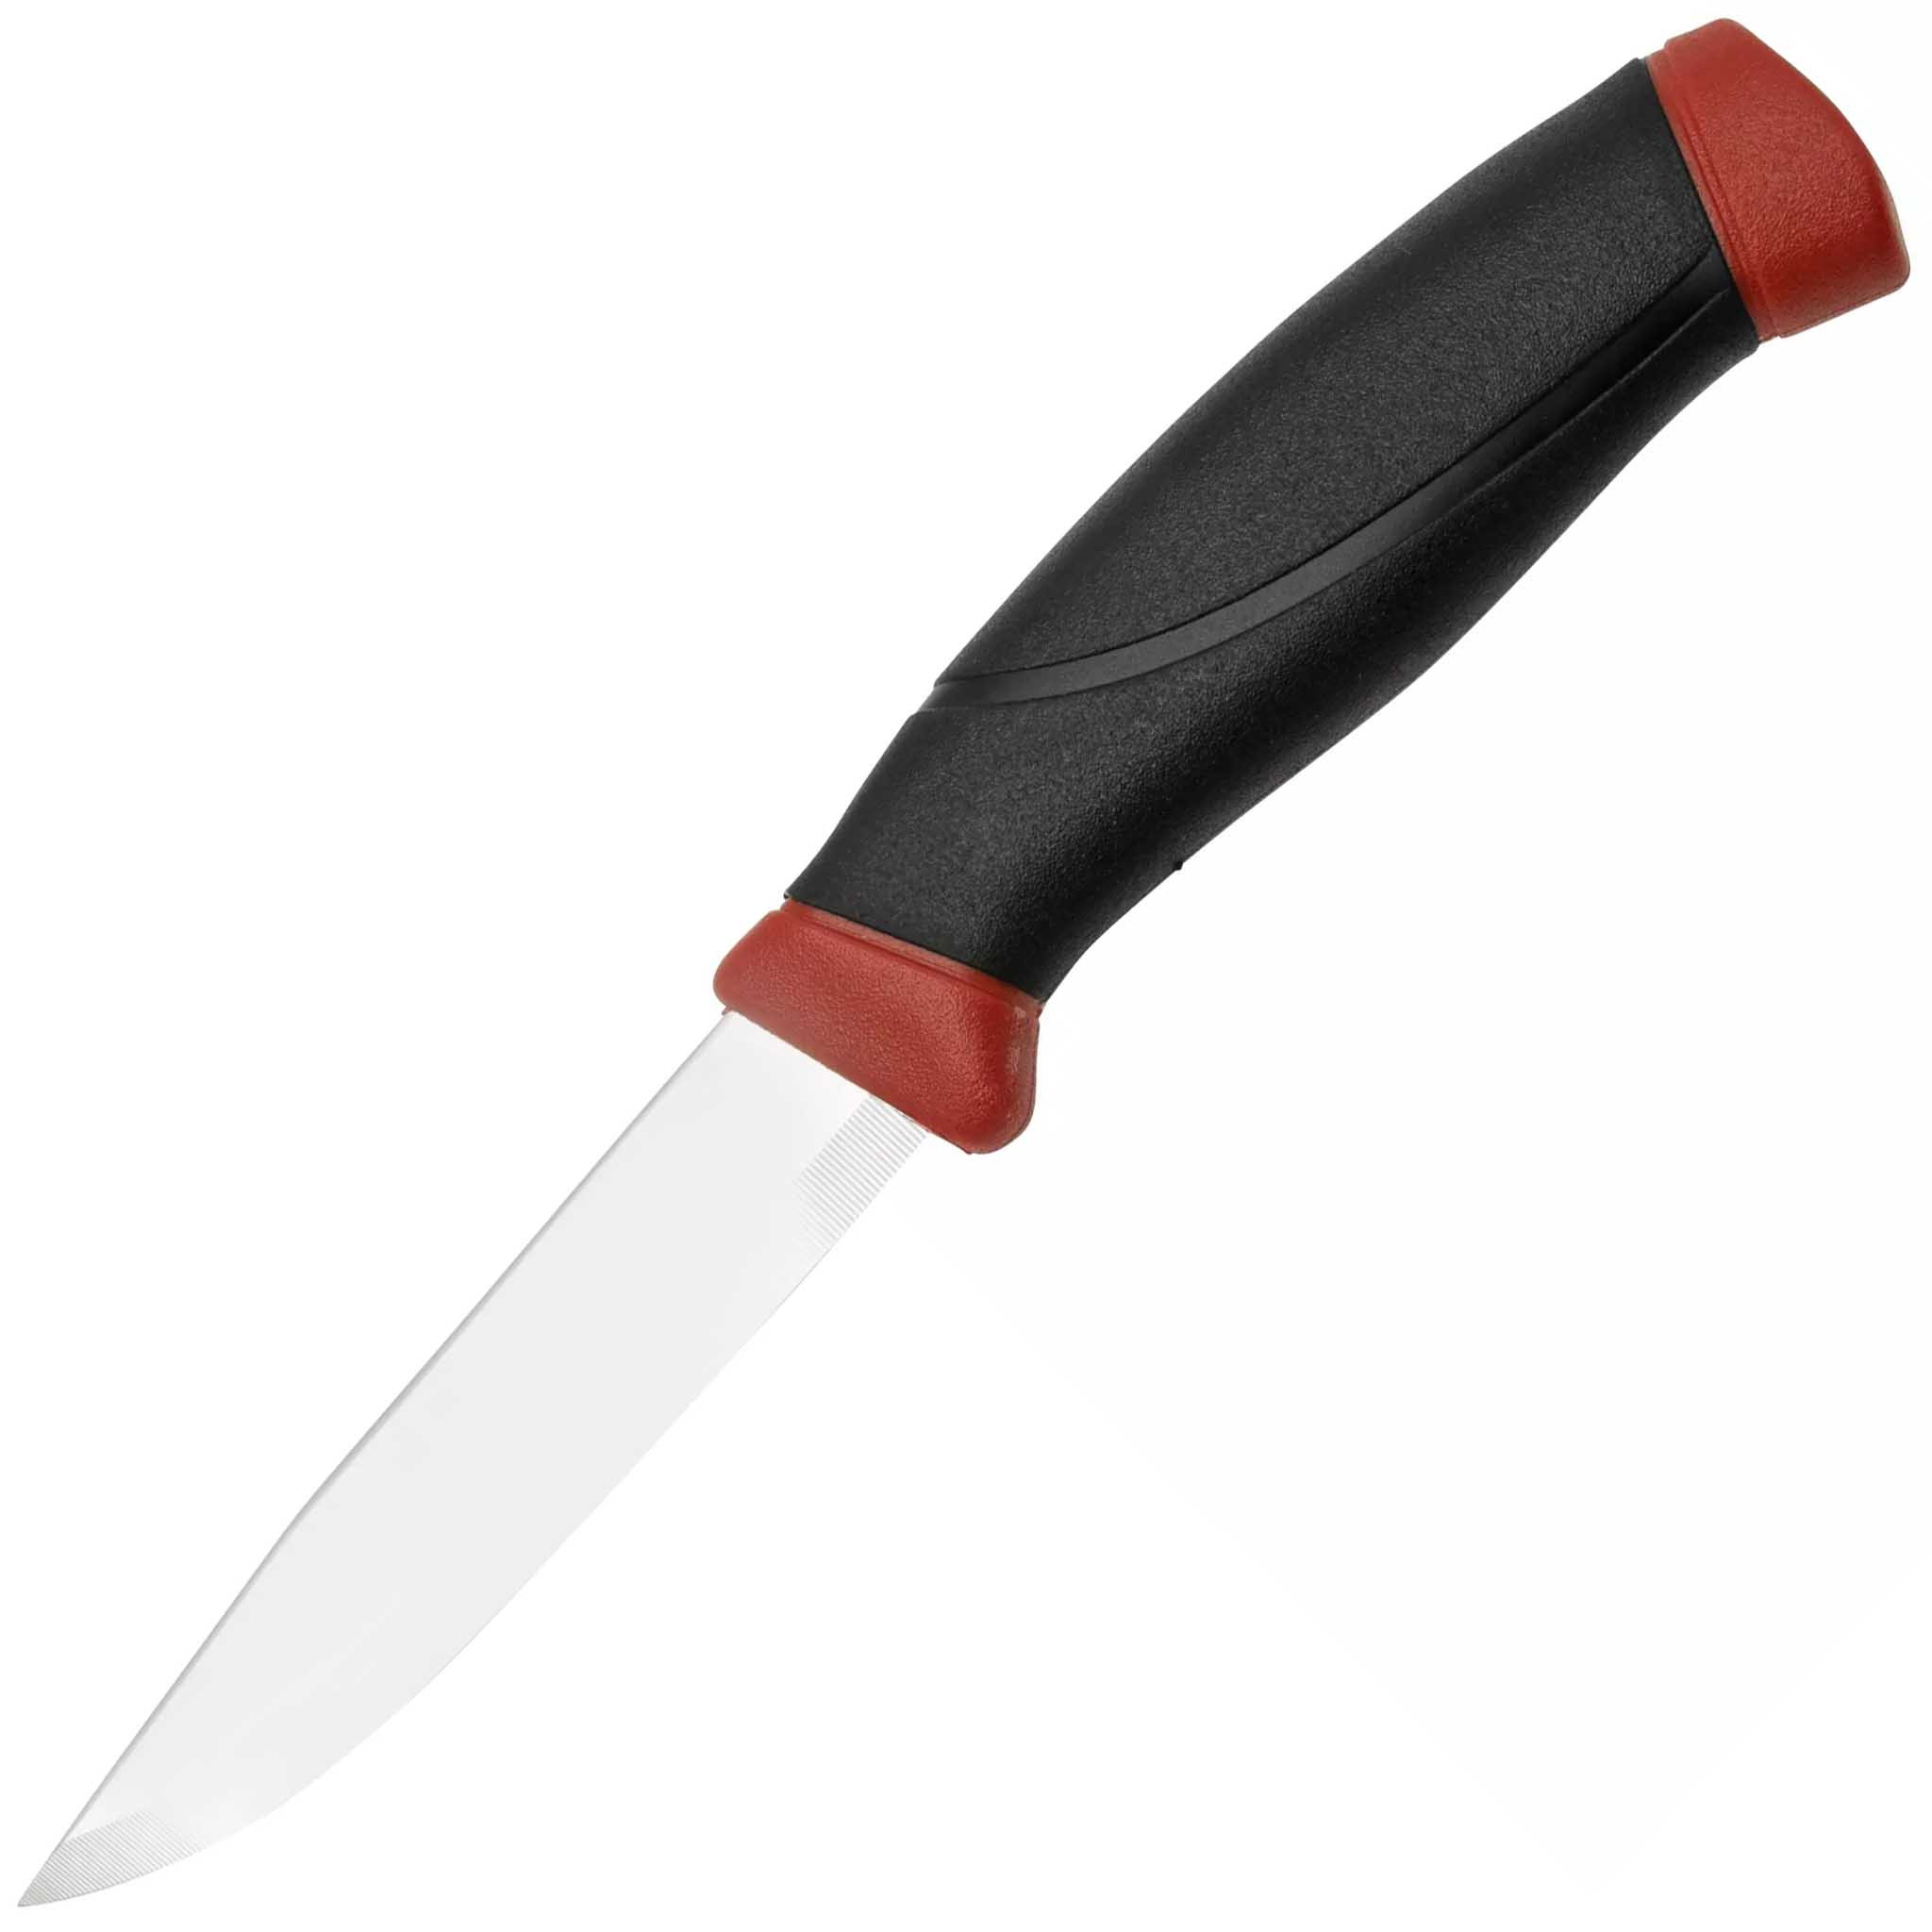 Нож с фиксированным лезвием Morakniv Companion, сталь Sandvik 12C27, рукоять резина, Dala red нож companion f rescue 11828 morakniv